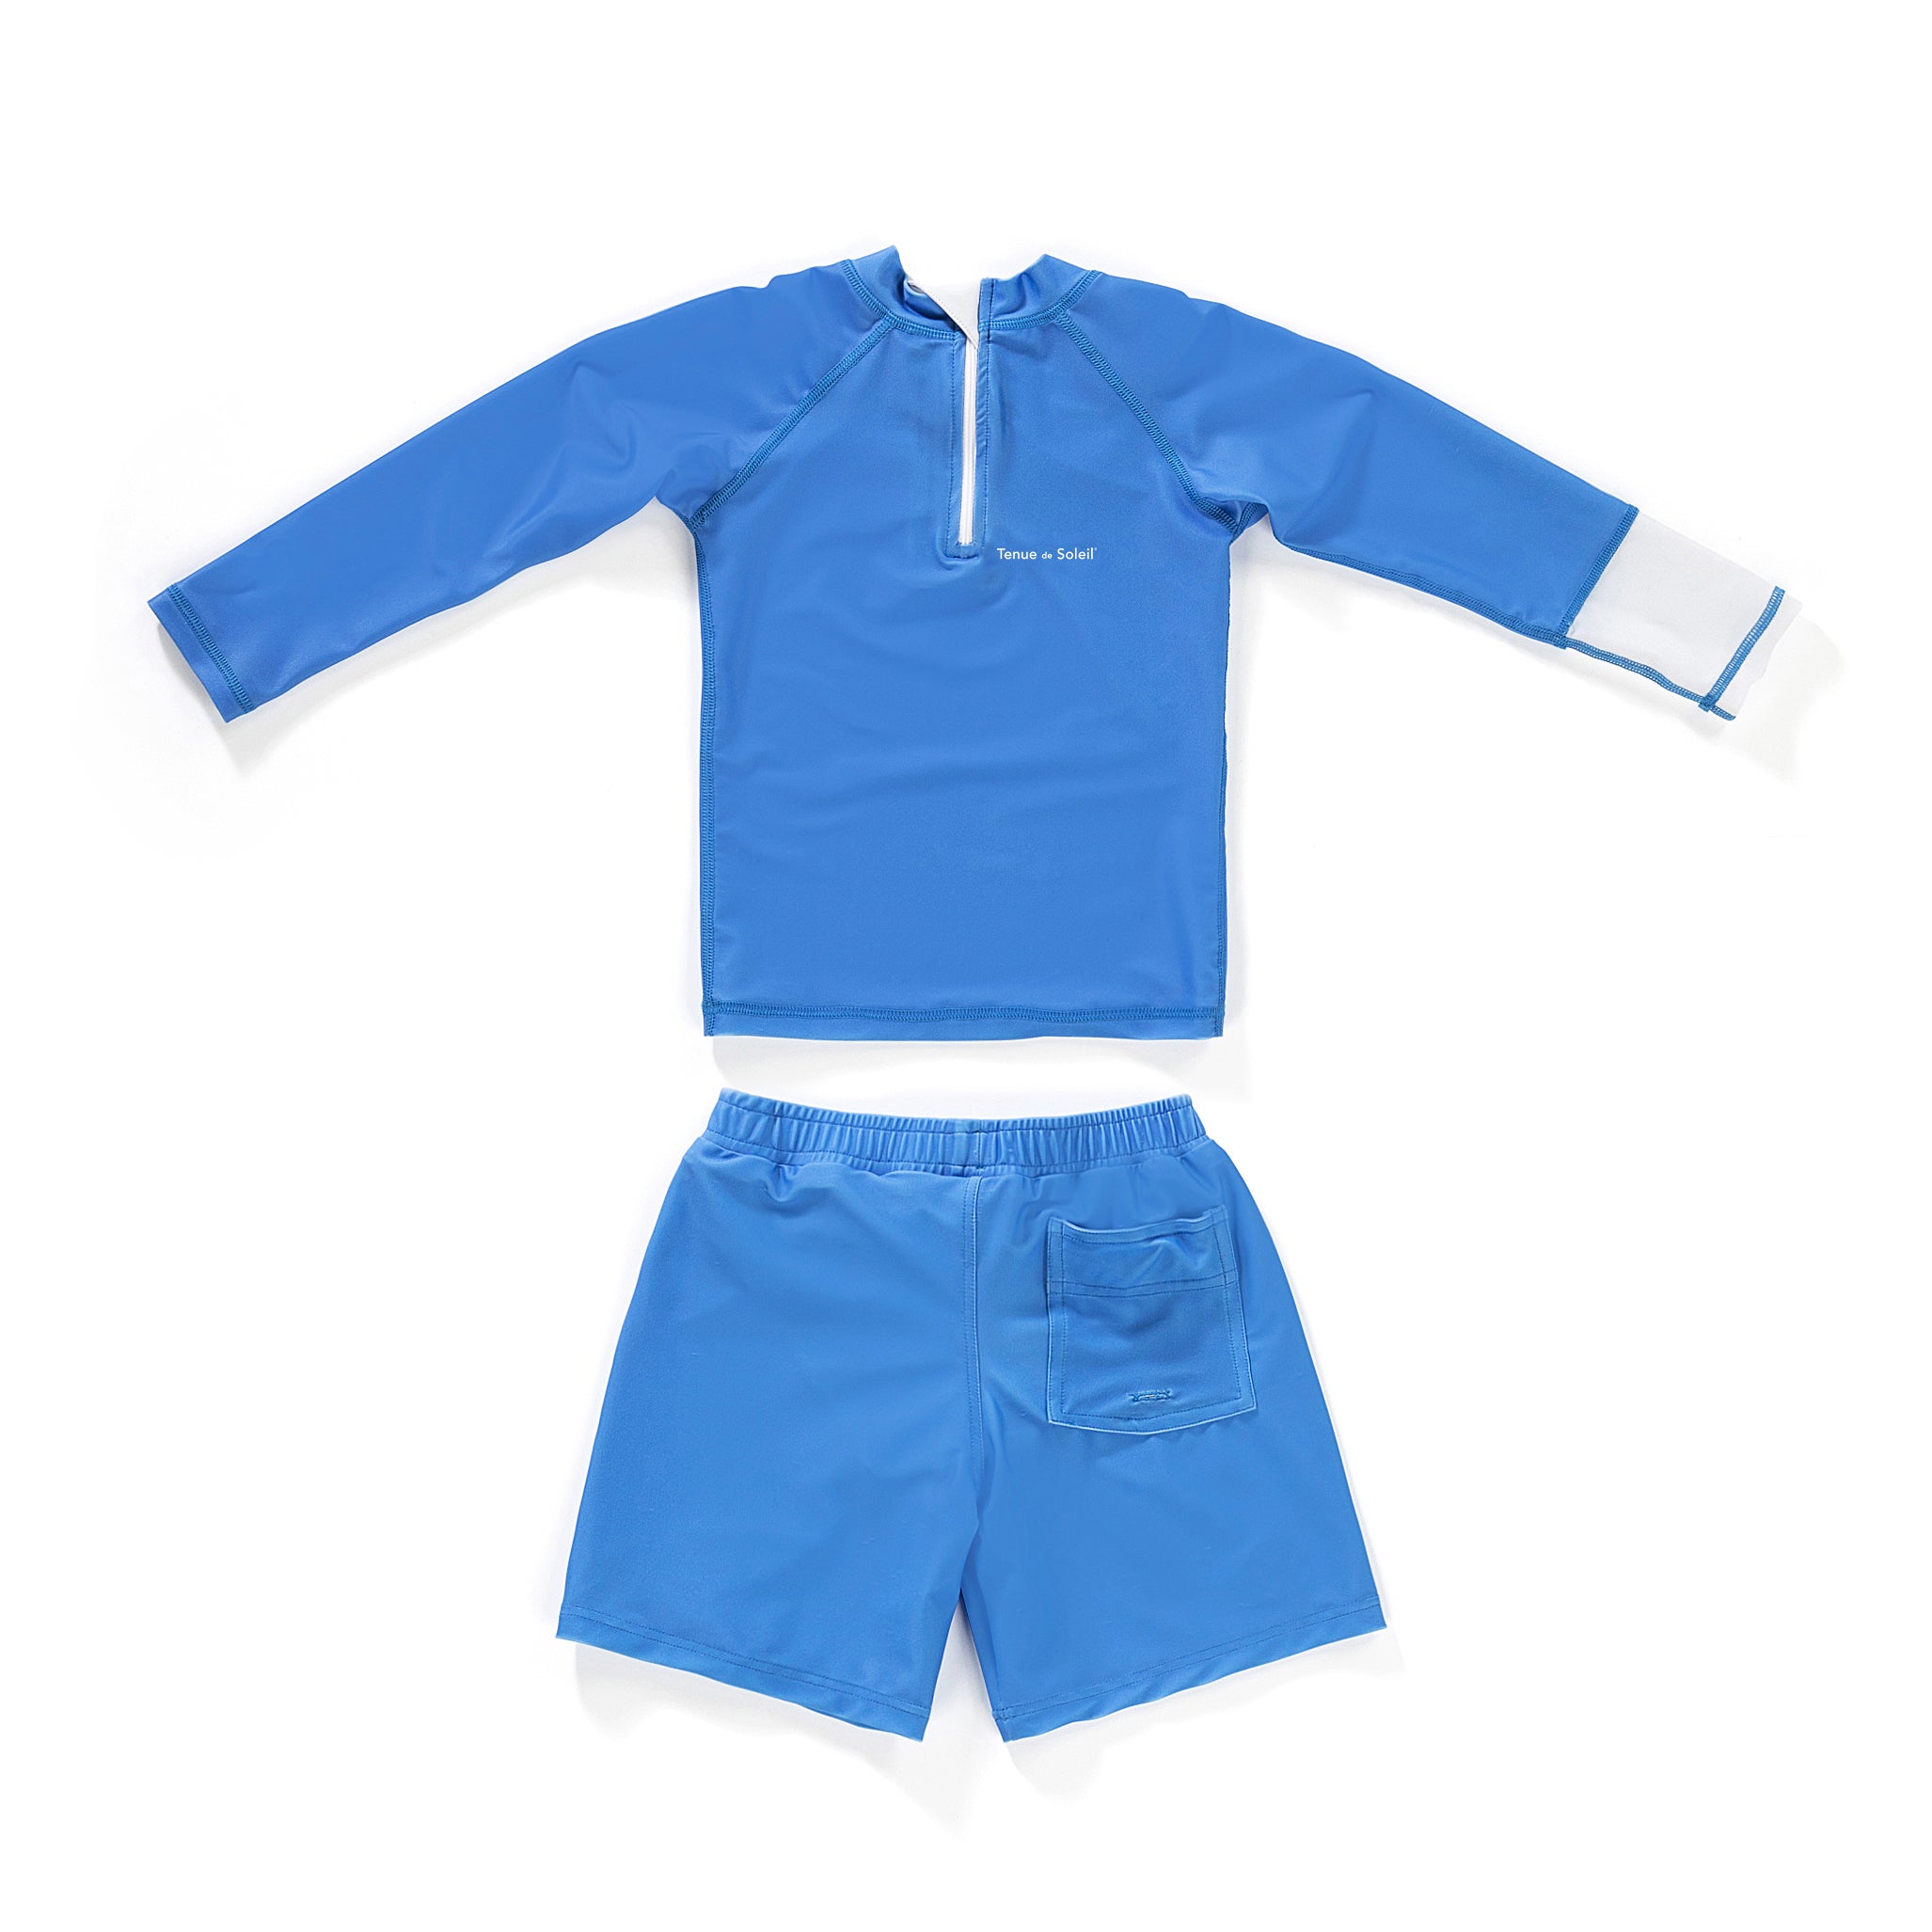 Oti Set Pacific - UV-top en shorts